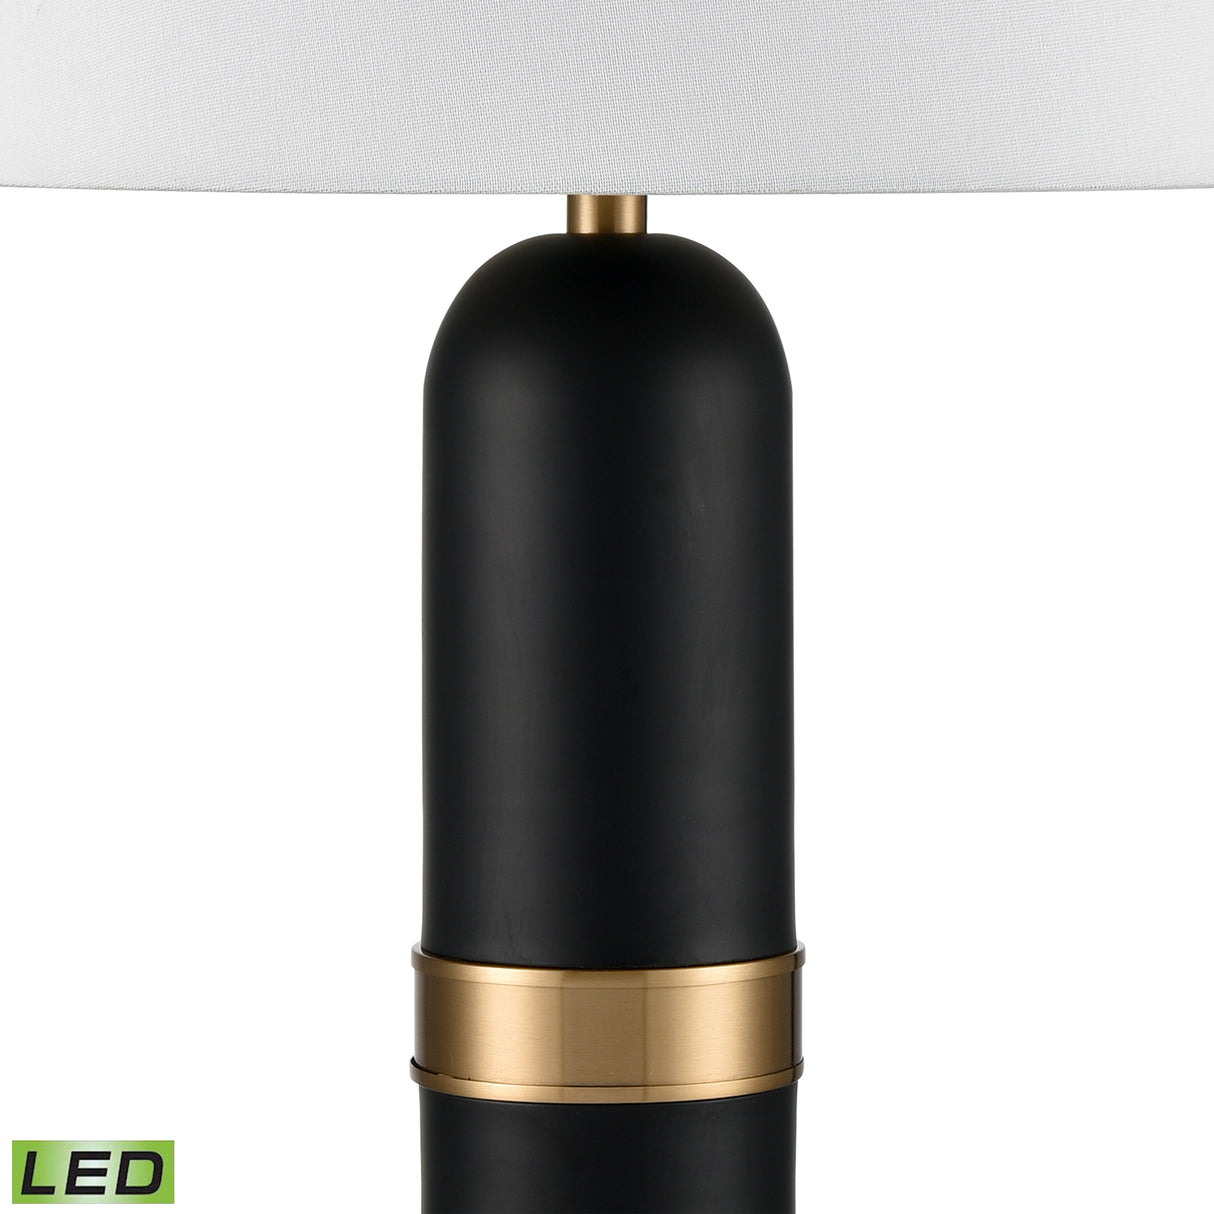 Elk H0019-9576-LED Pill 34'' High 1-Light Table Lamp - Matte Black - Includes LED Bulb